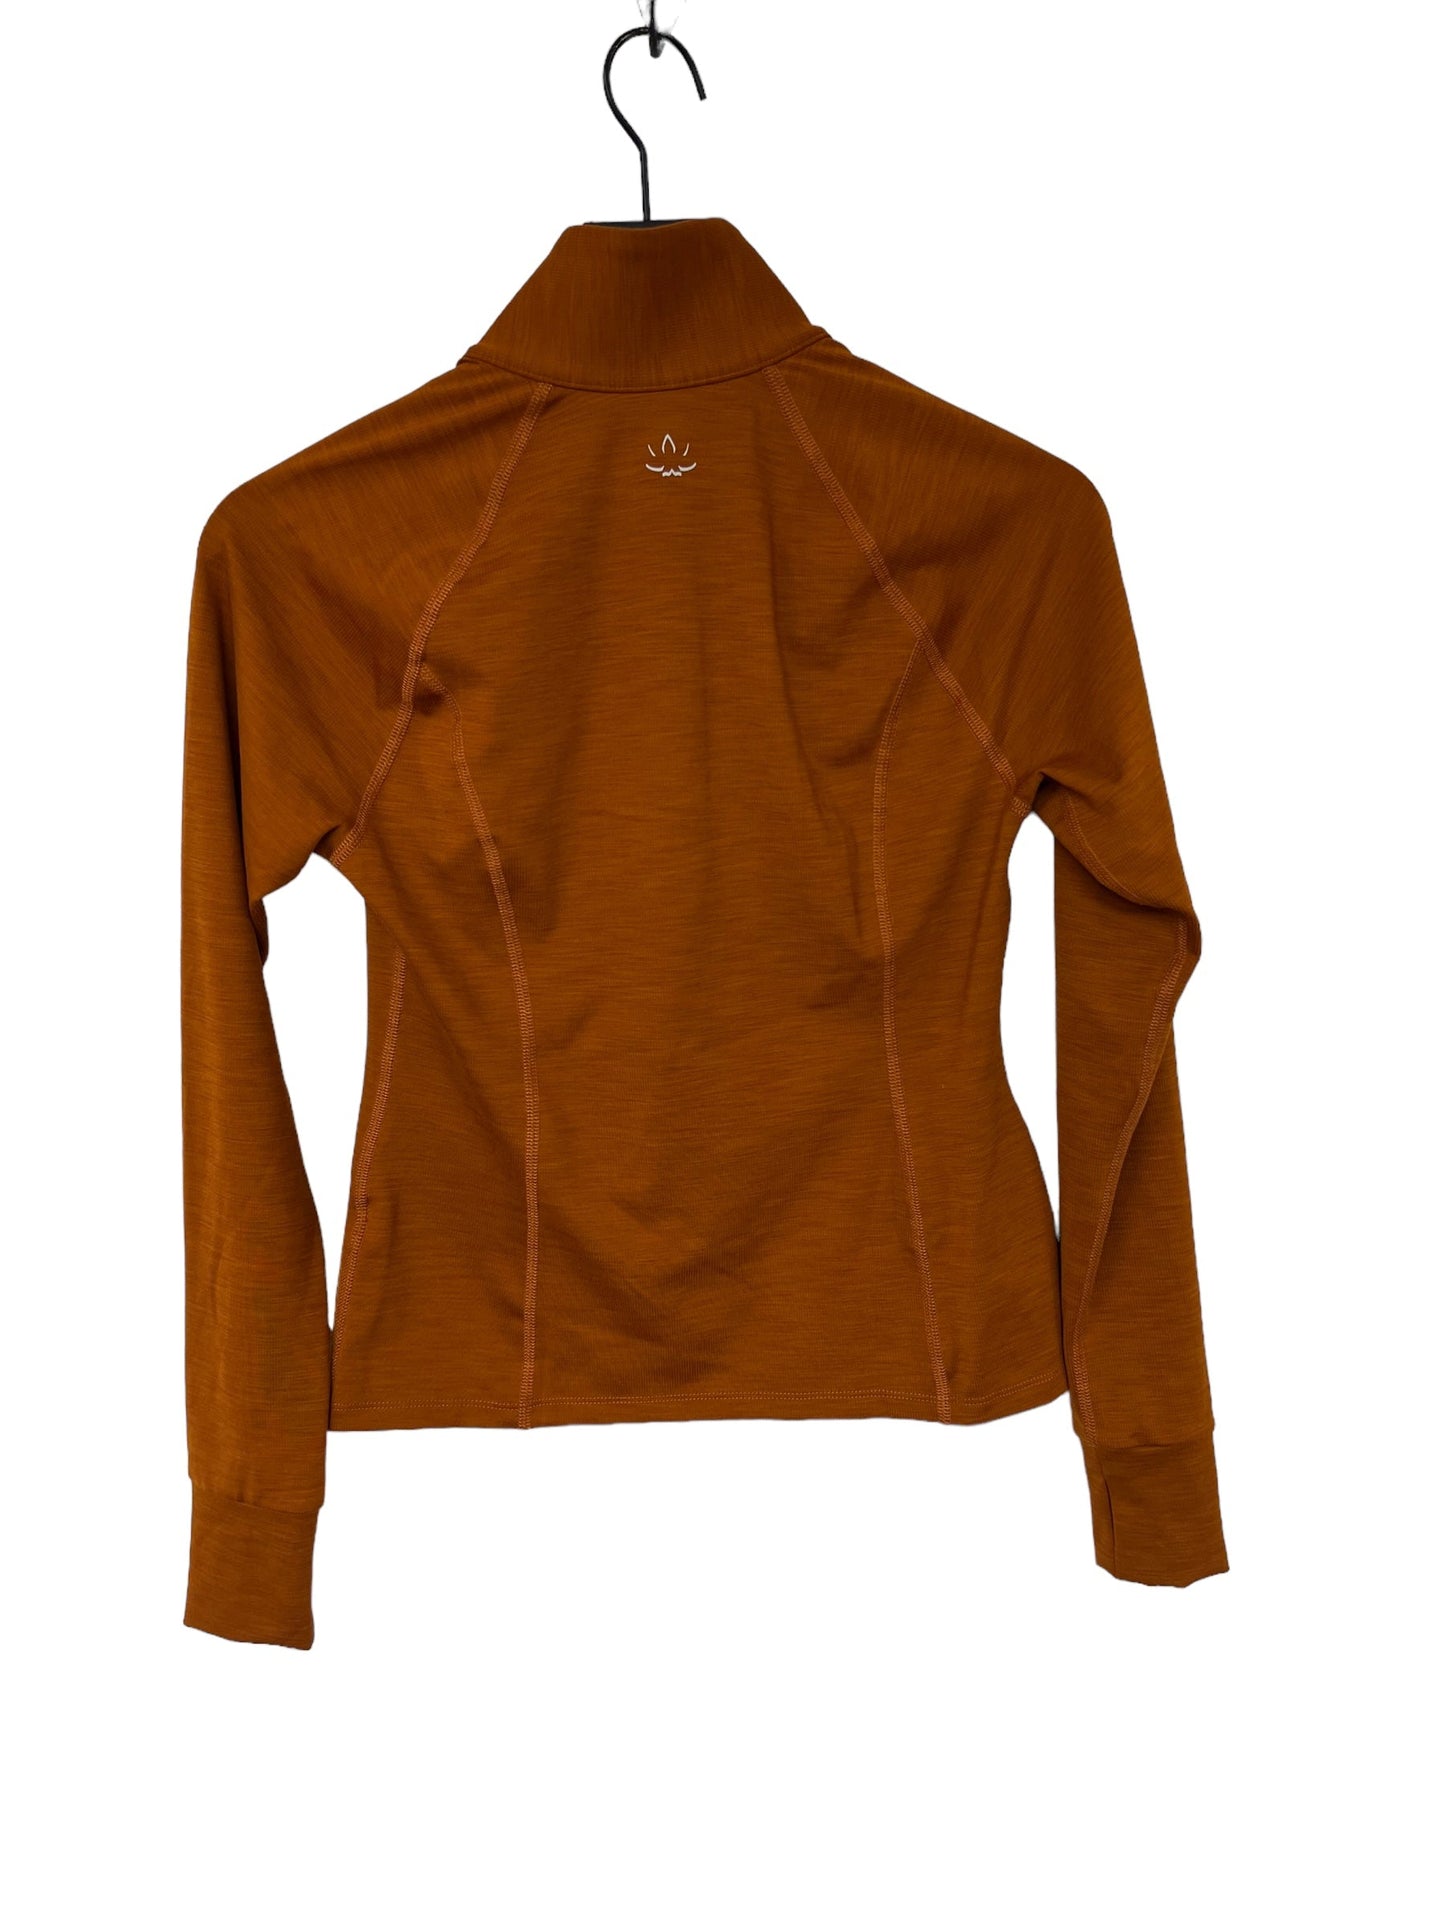 Orange Athletic Top Long Sleeve Collar Beyond Yoga, Size S